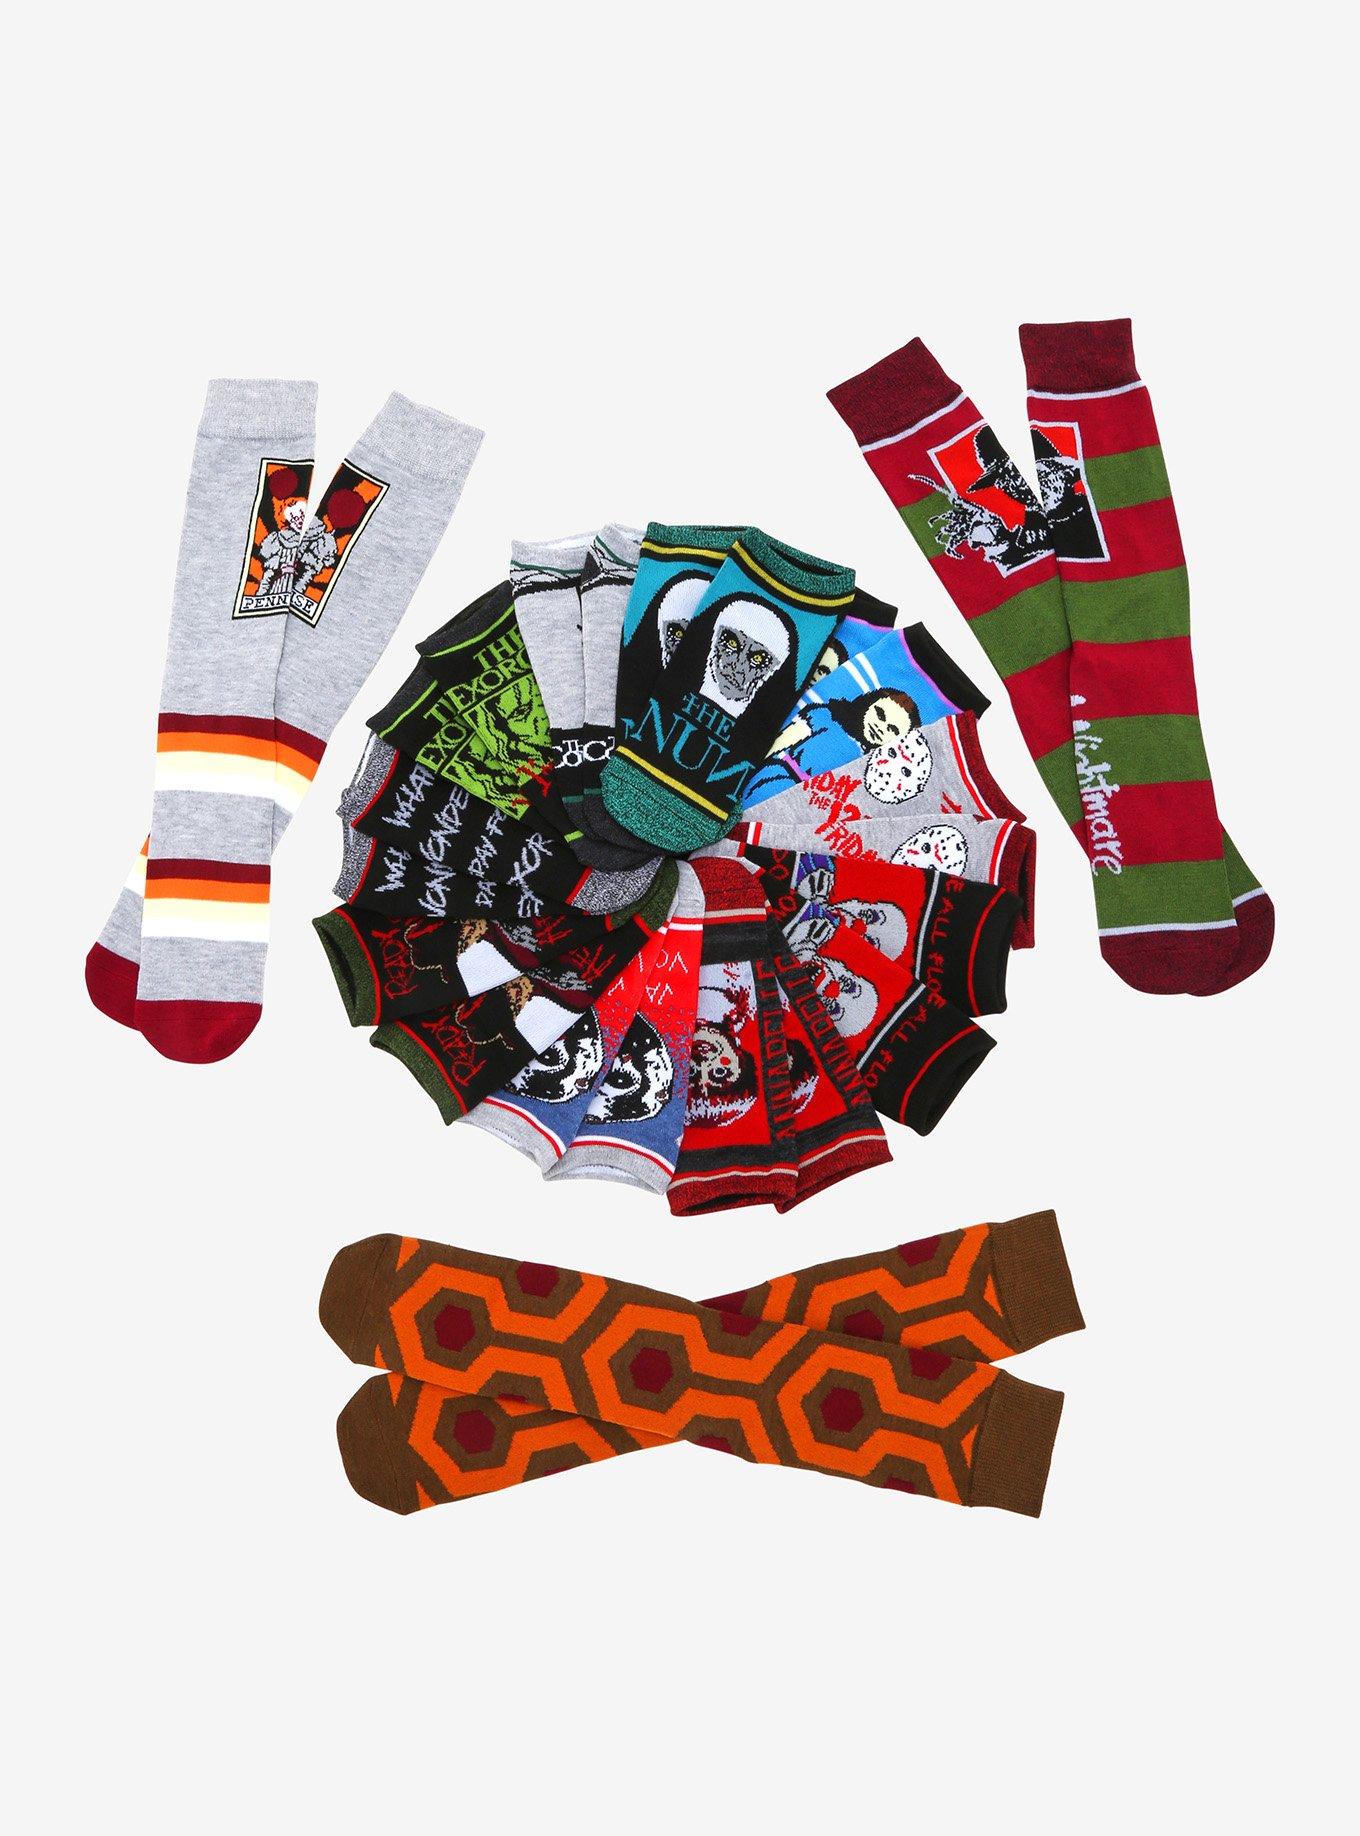 13 Scary Days Of Socks Gift Set, , alternate